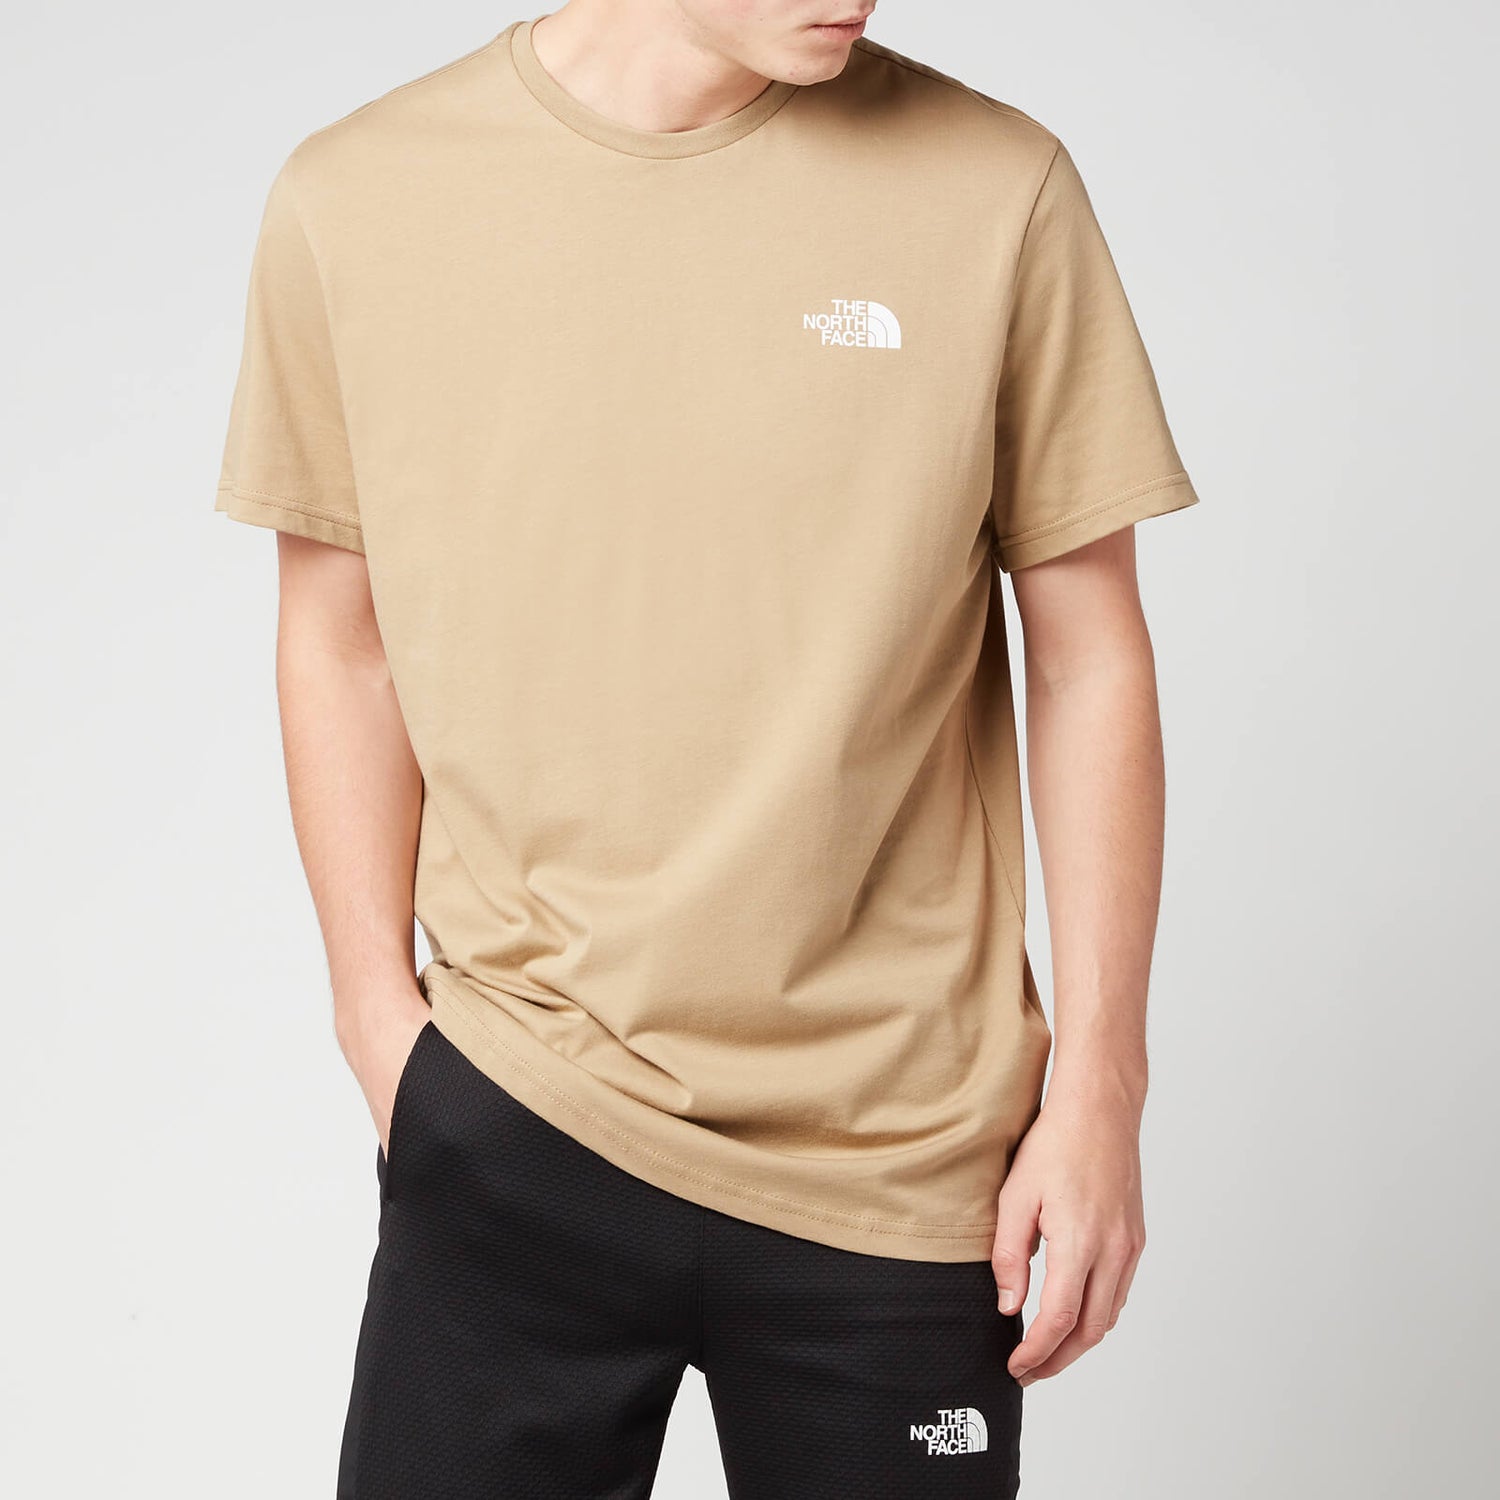 The North Face Men's Simple Dome T-Shirt - Kelp Tan